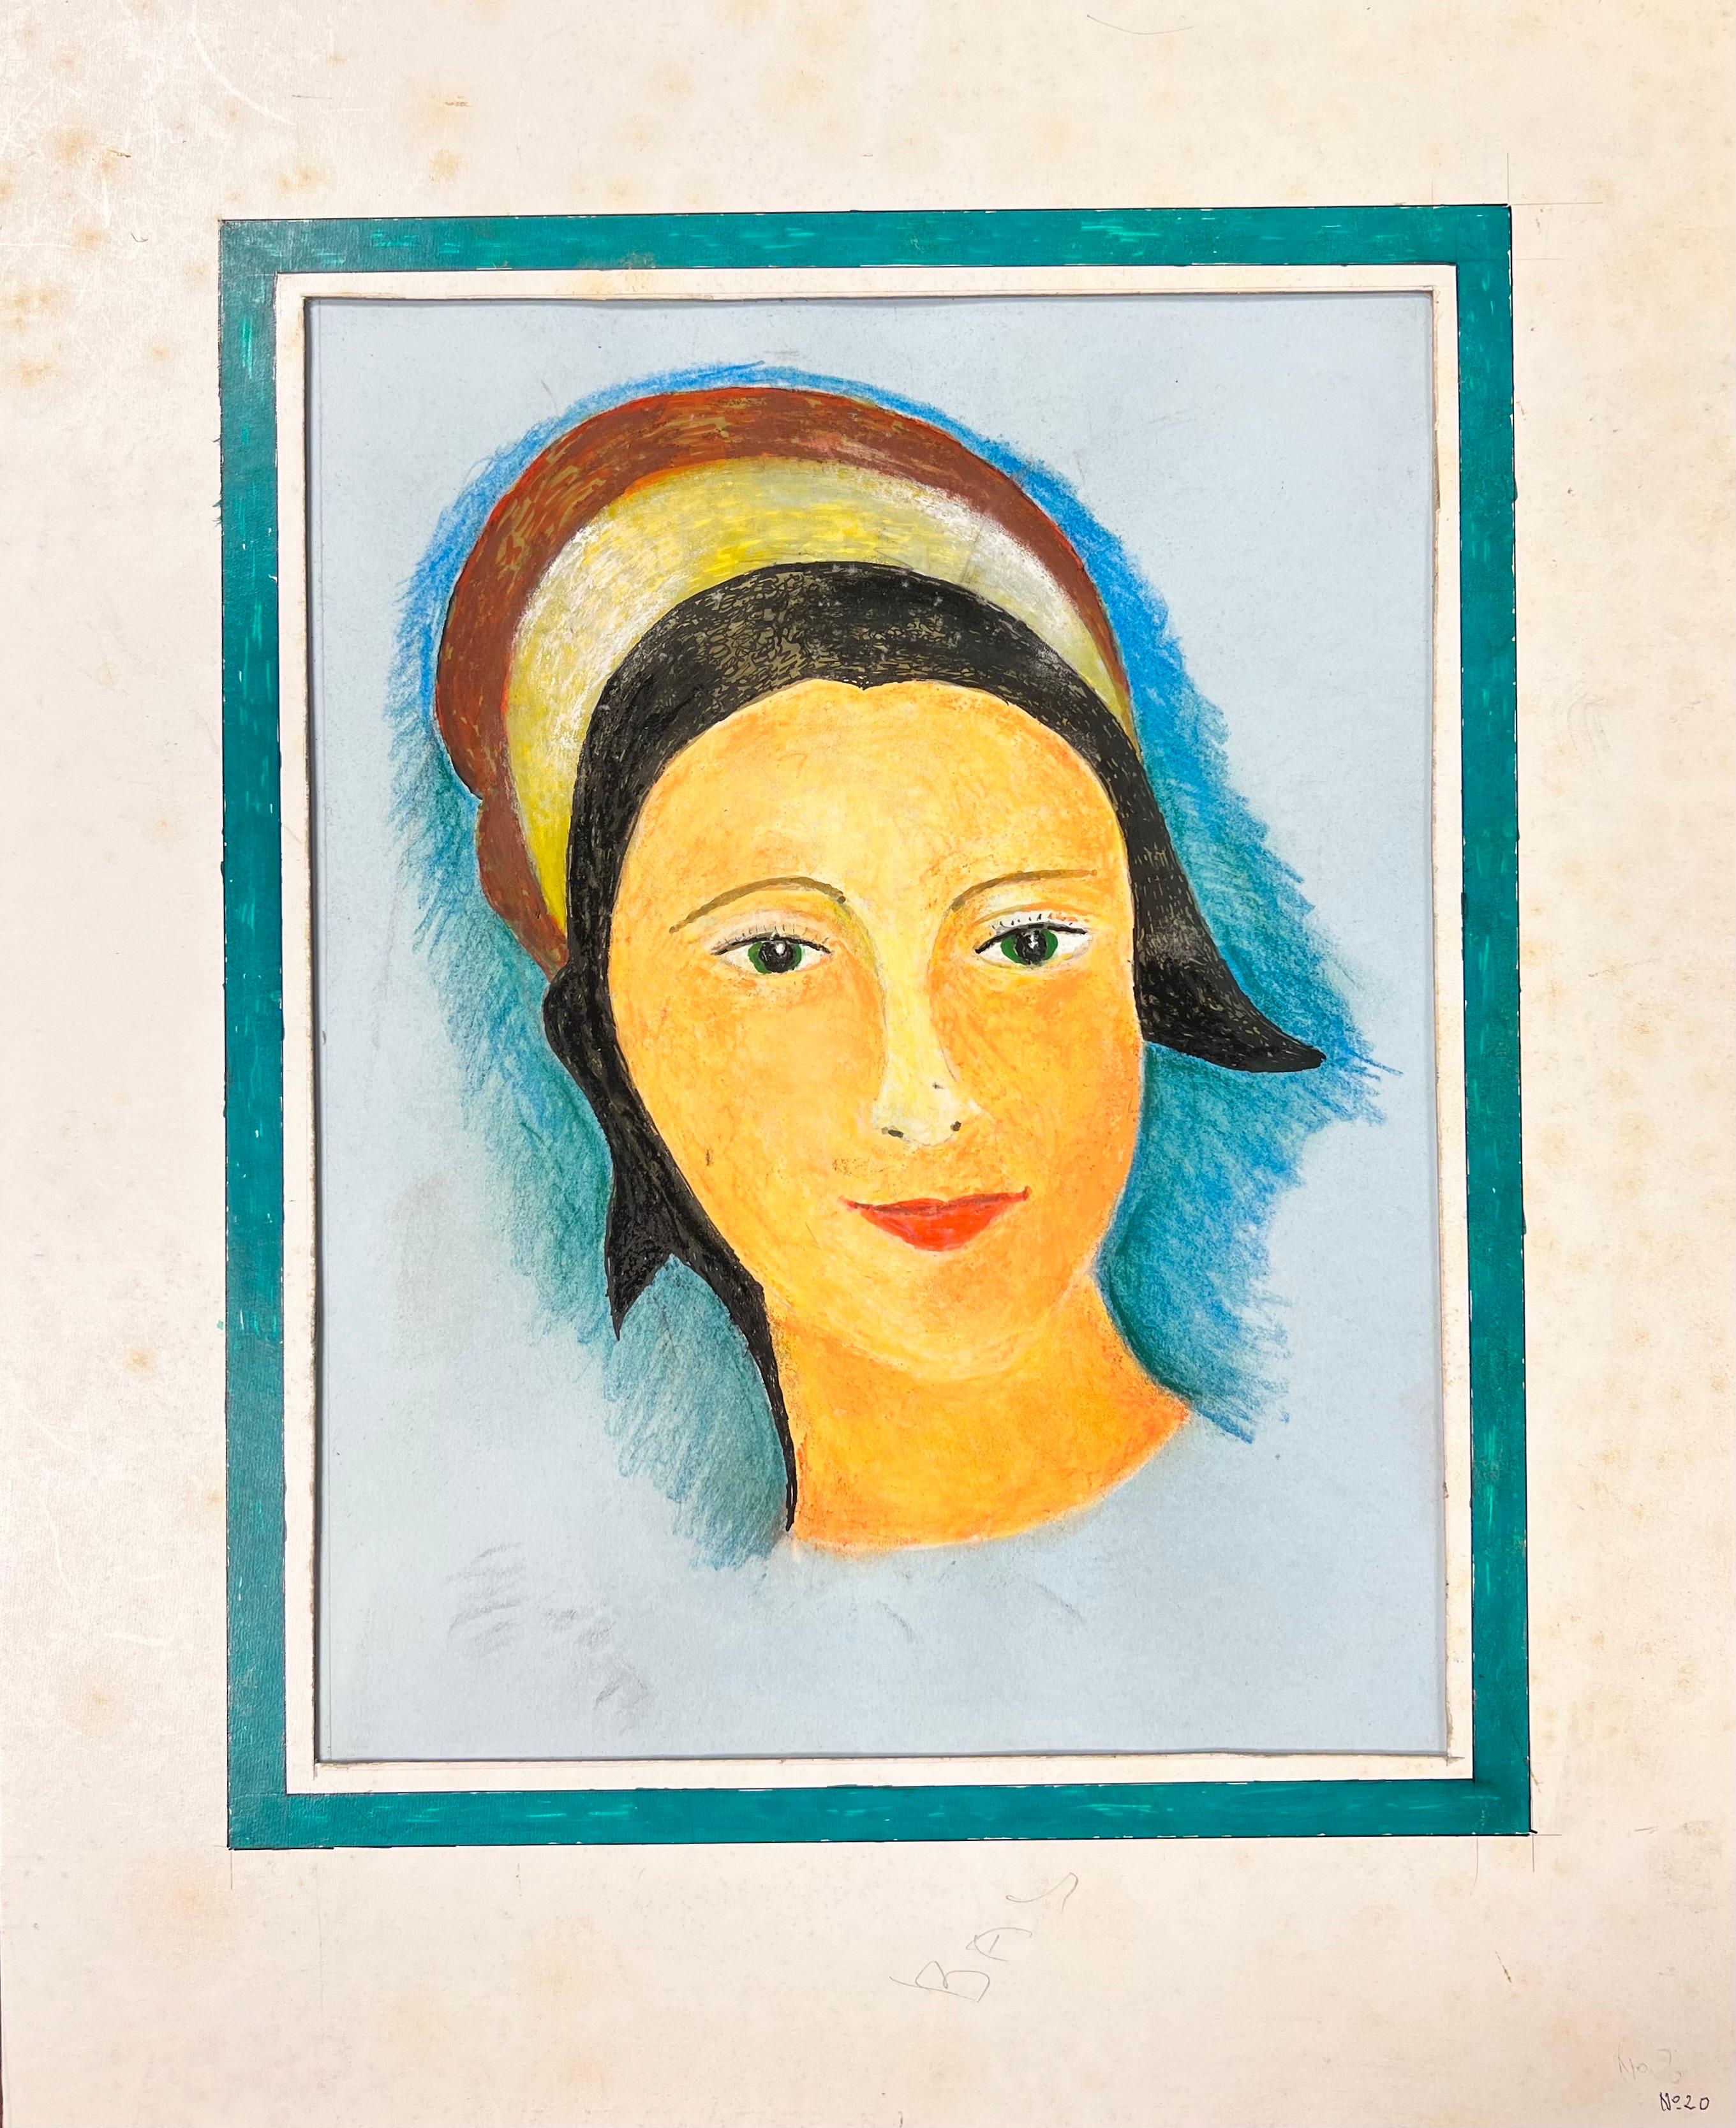 Bernard Labbe Figurative Art - 1950's Modernist/ Cubist Painting - Green Eyed Girl Portrait